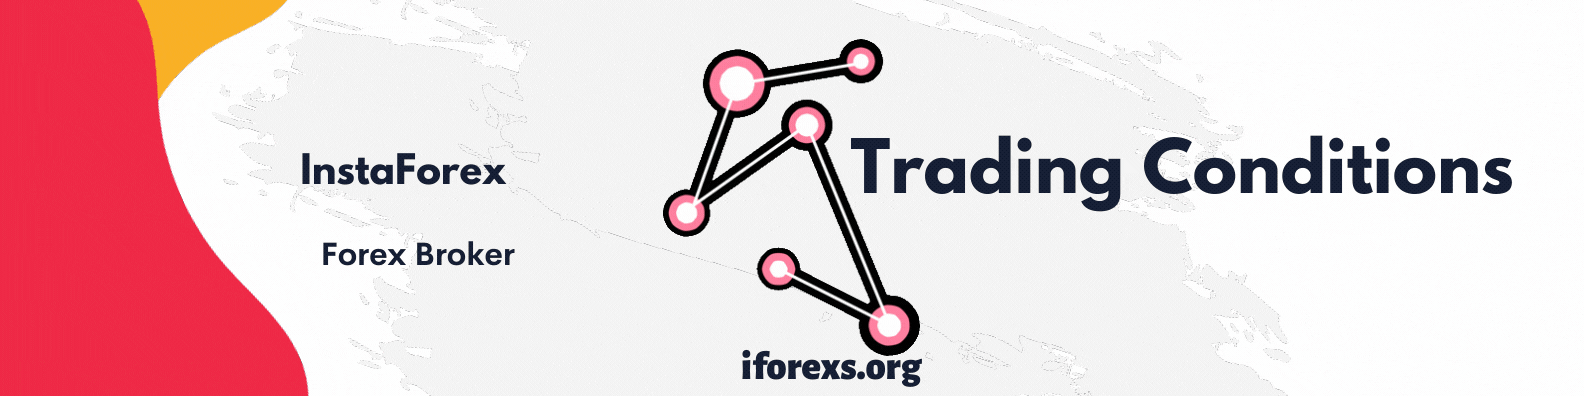 InstaForex Trading Conditions